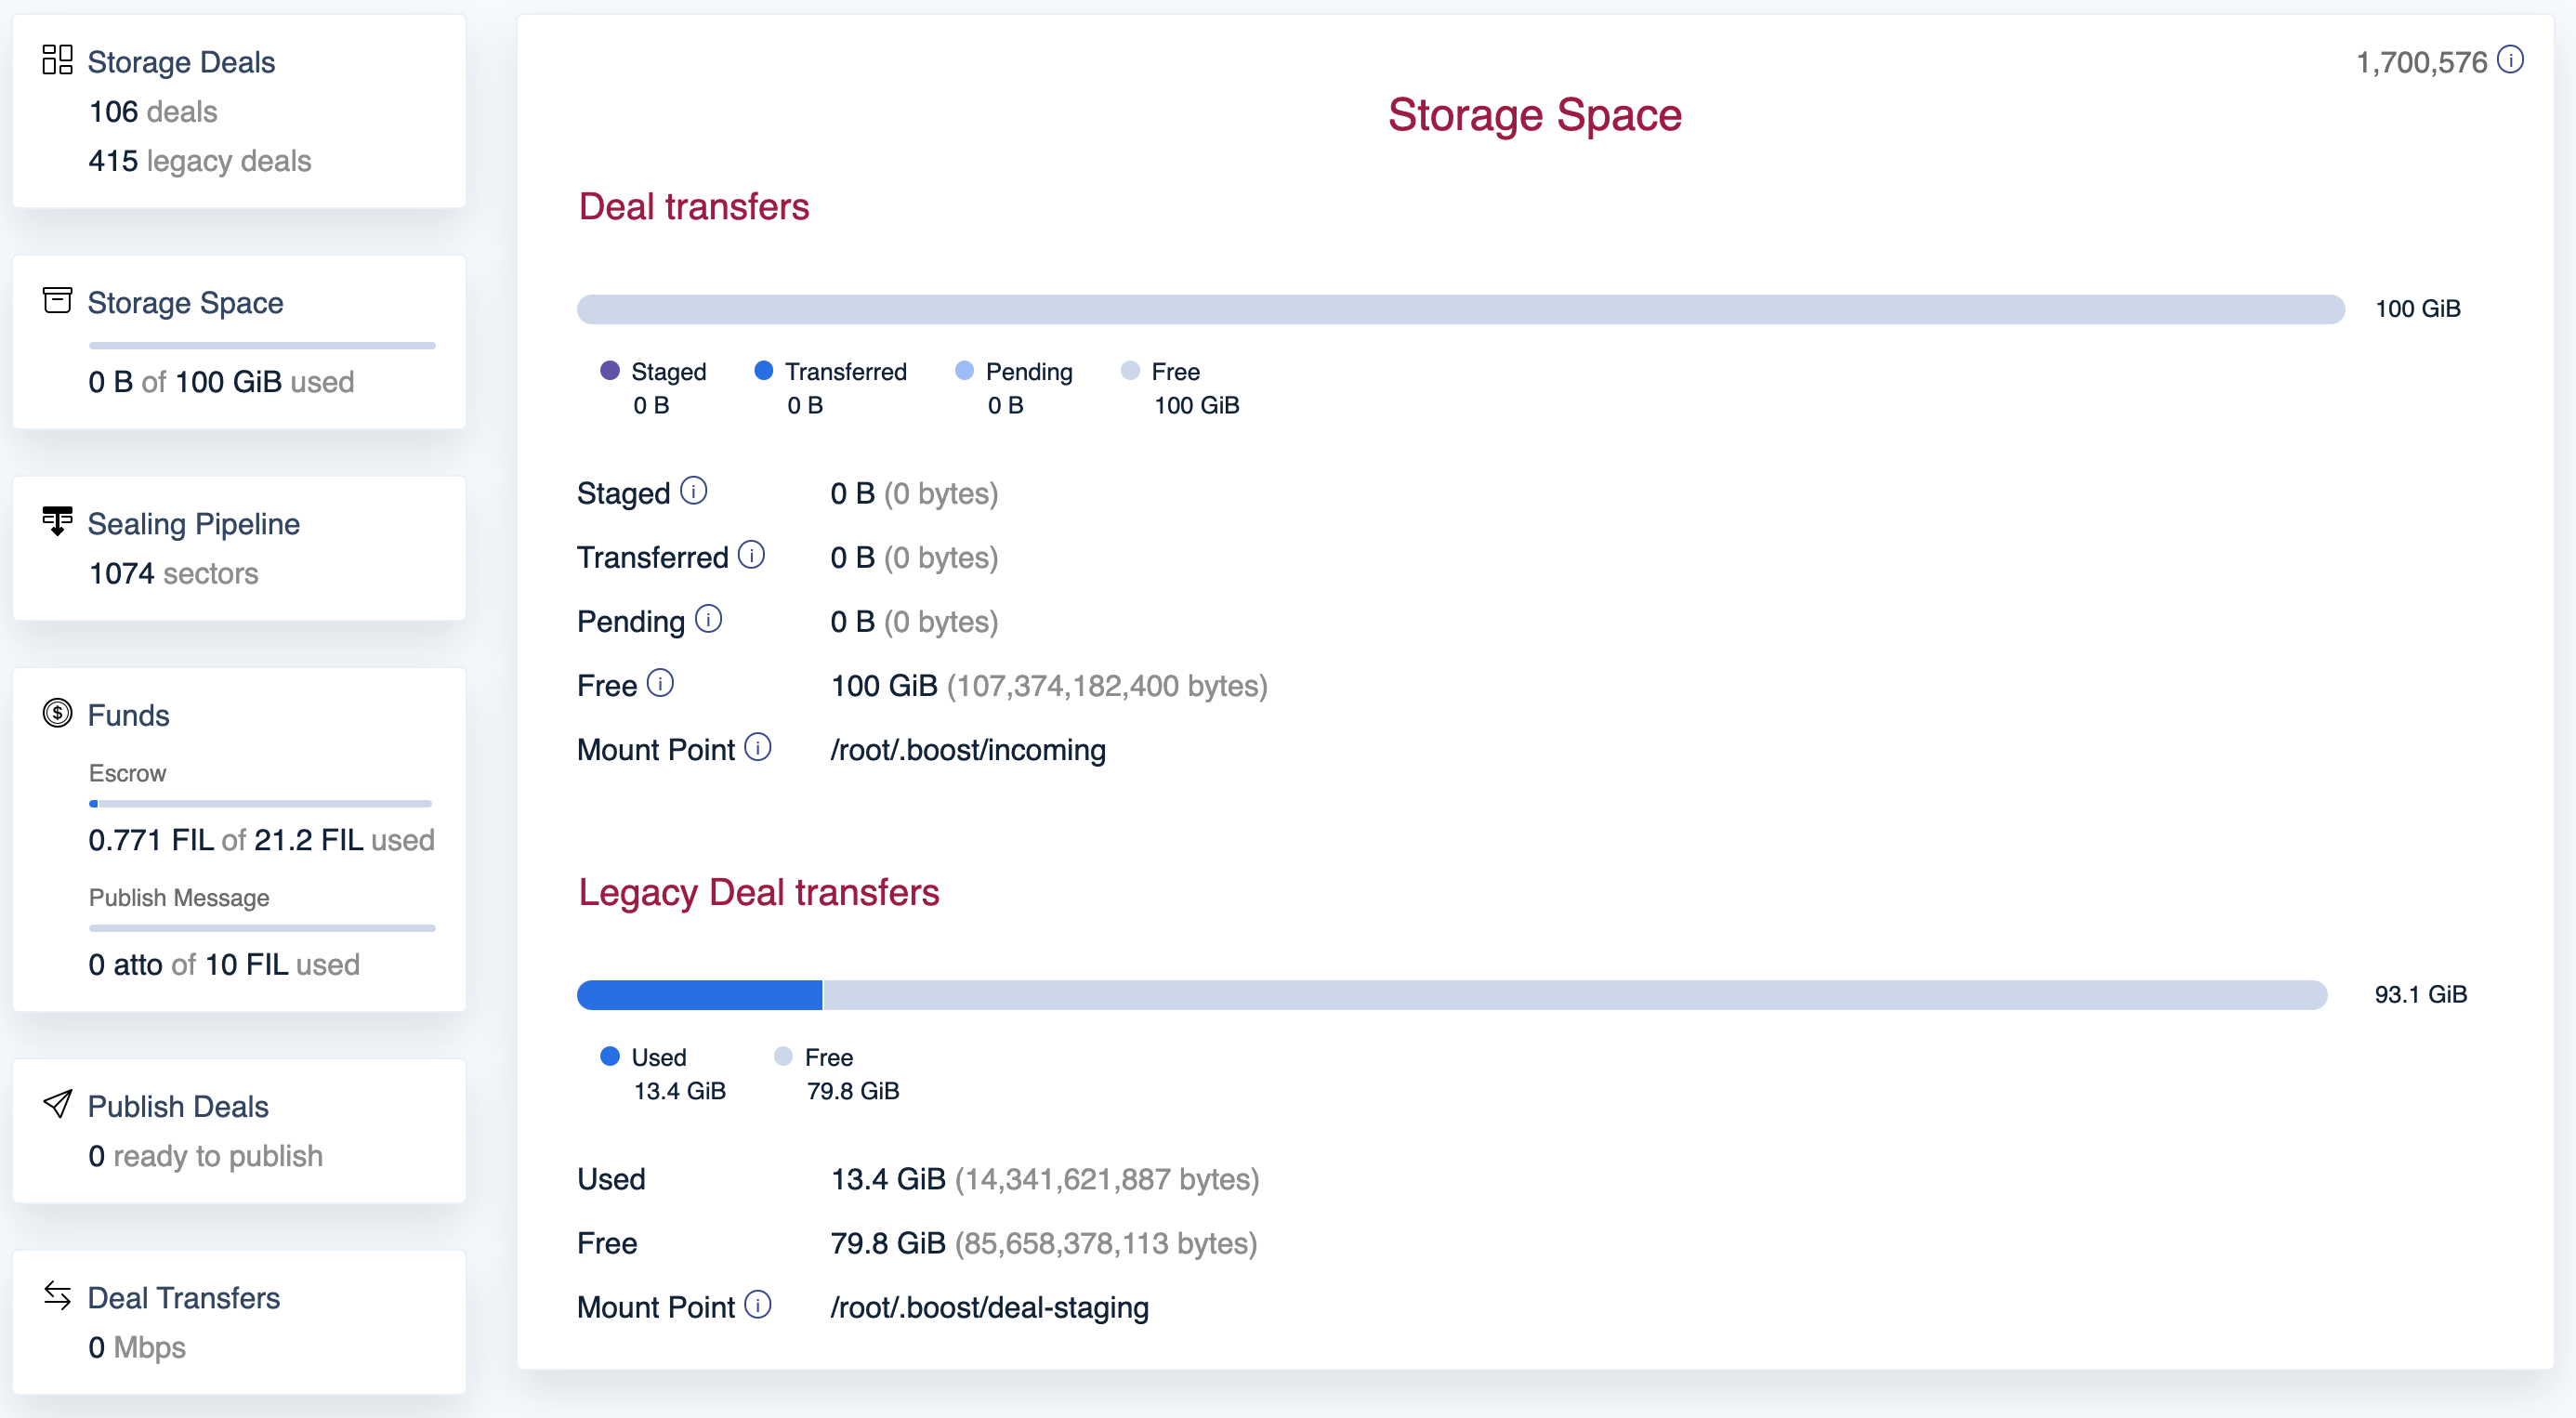 Web UI - Storage Space screen